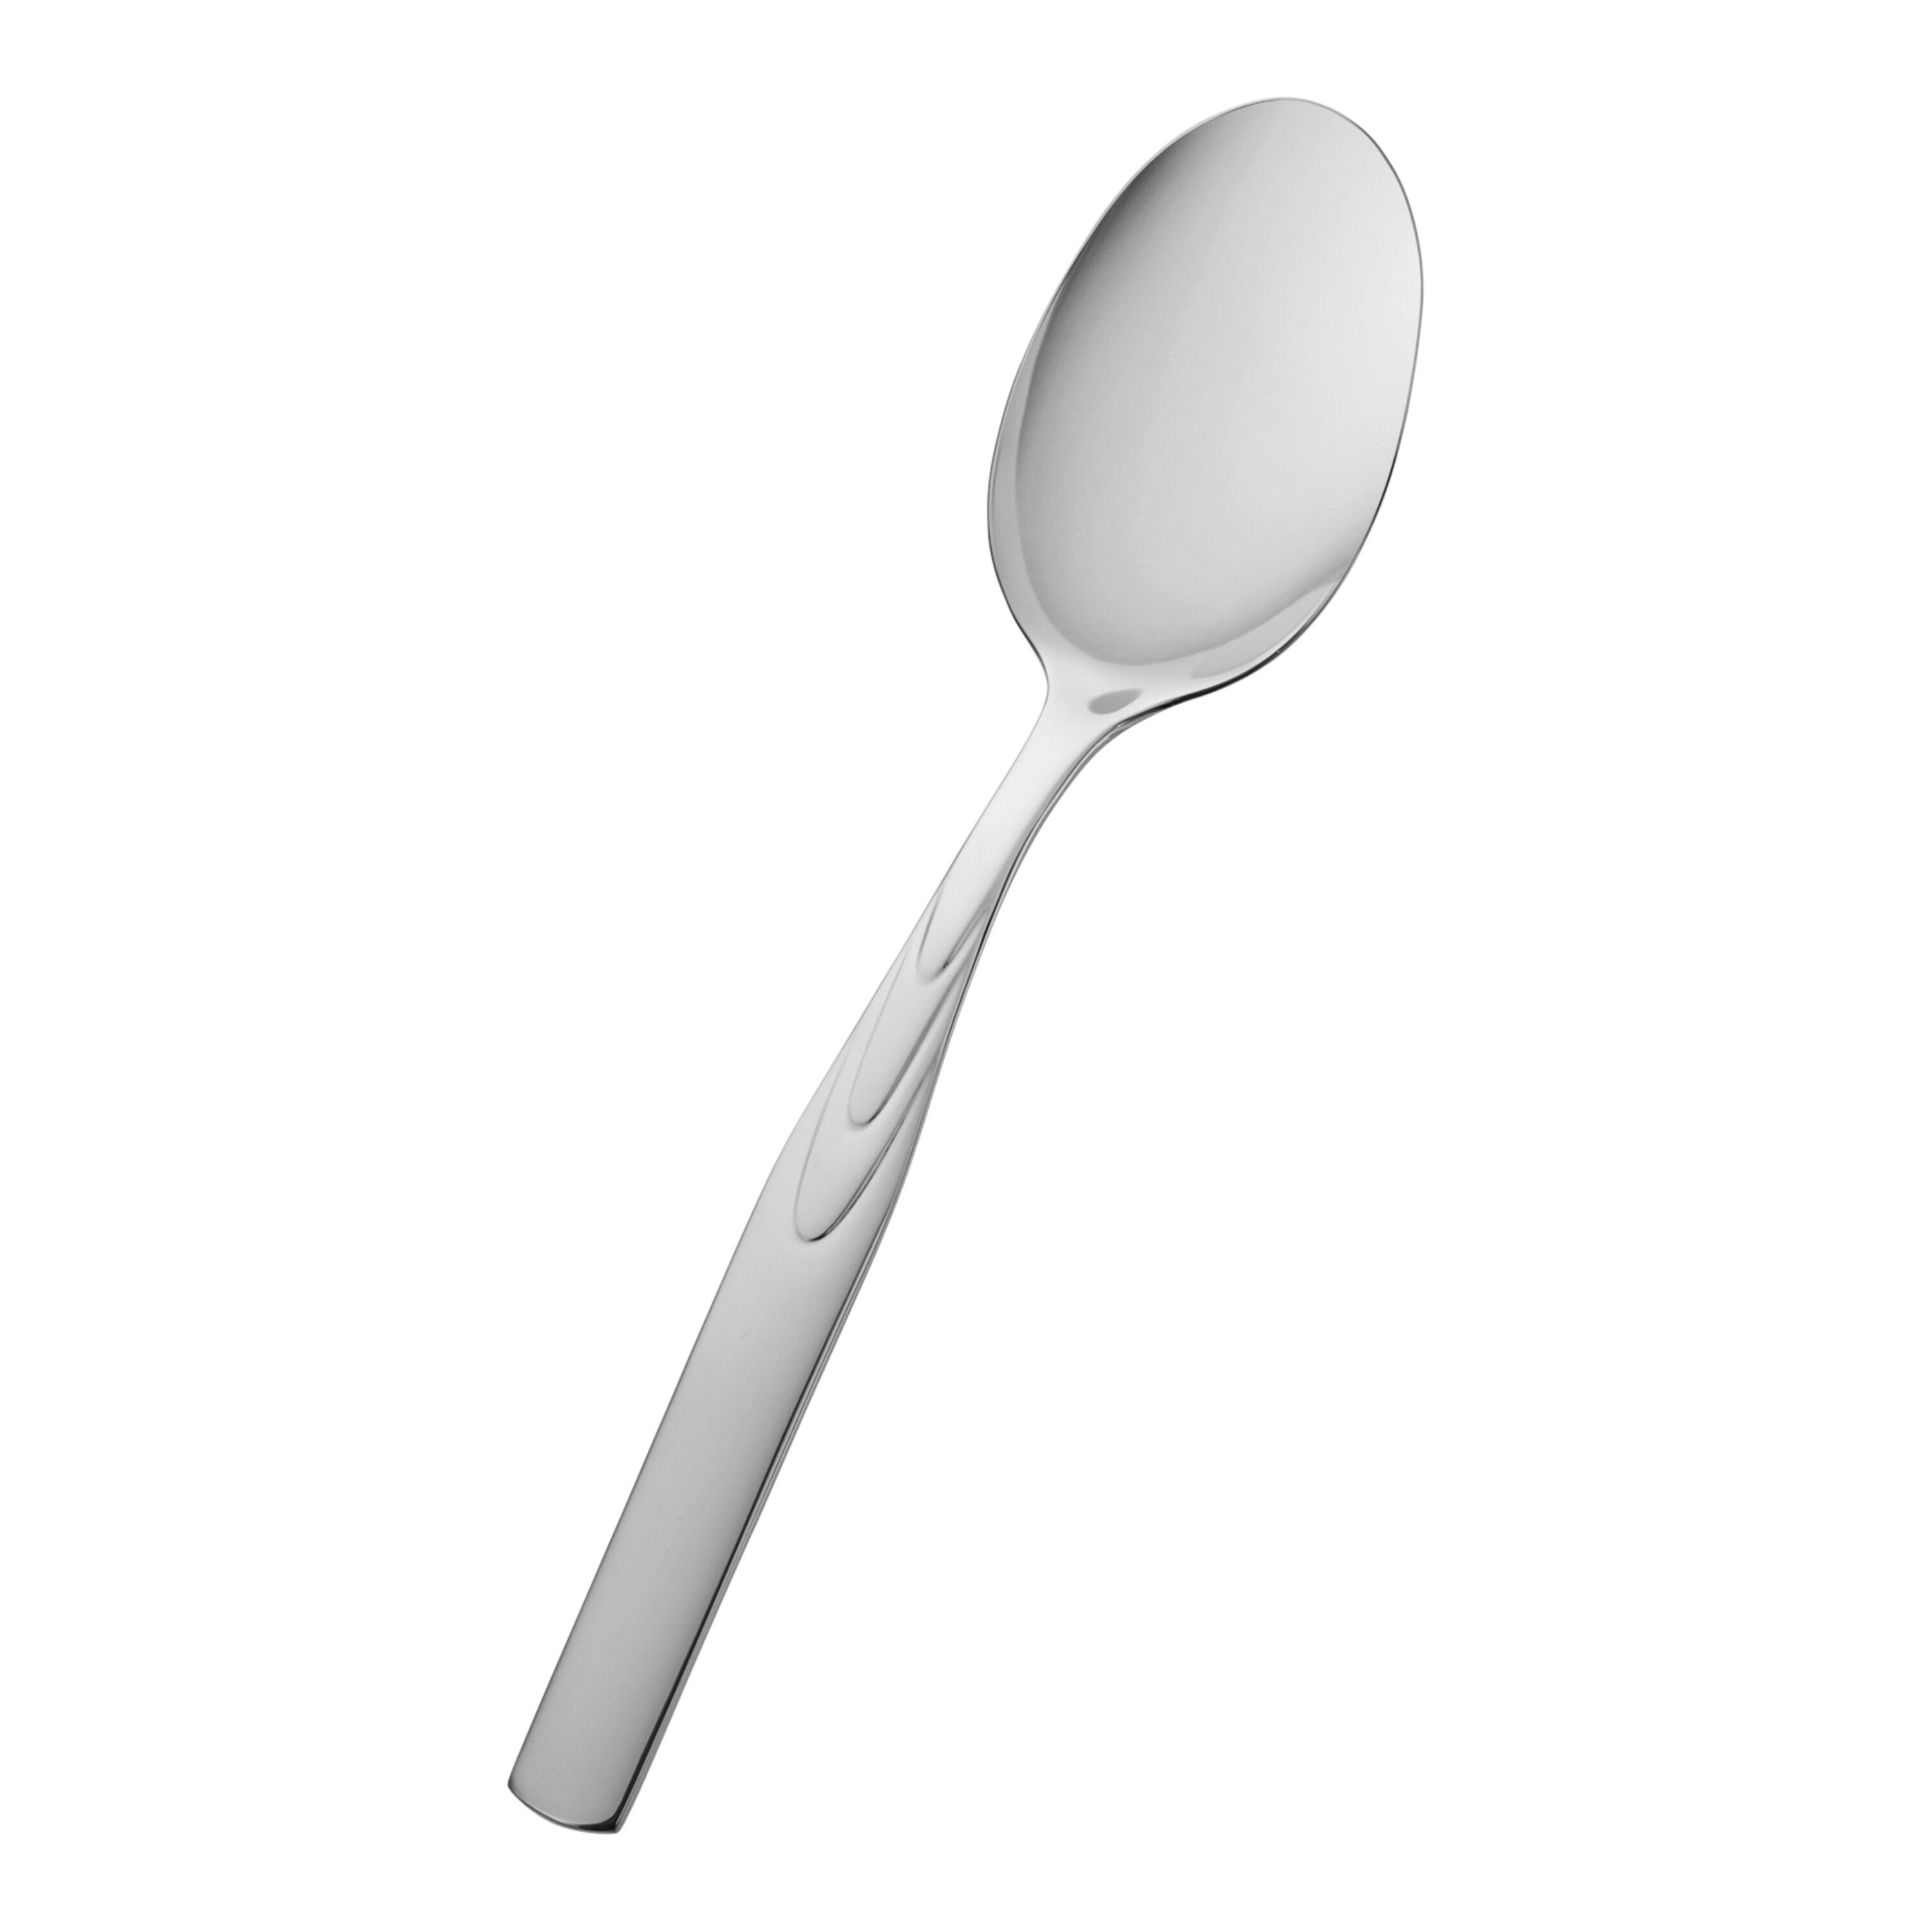 Henckels Stainless Steel Silicone Serving Spoon : Target